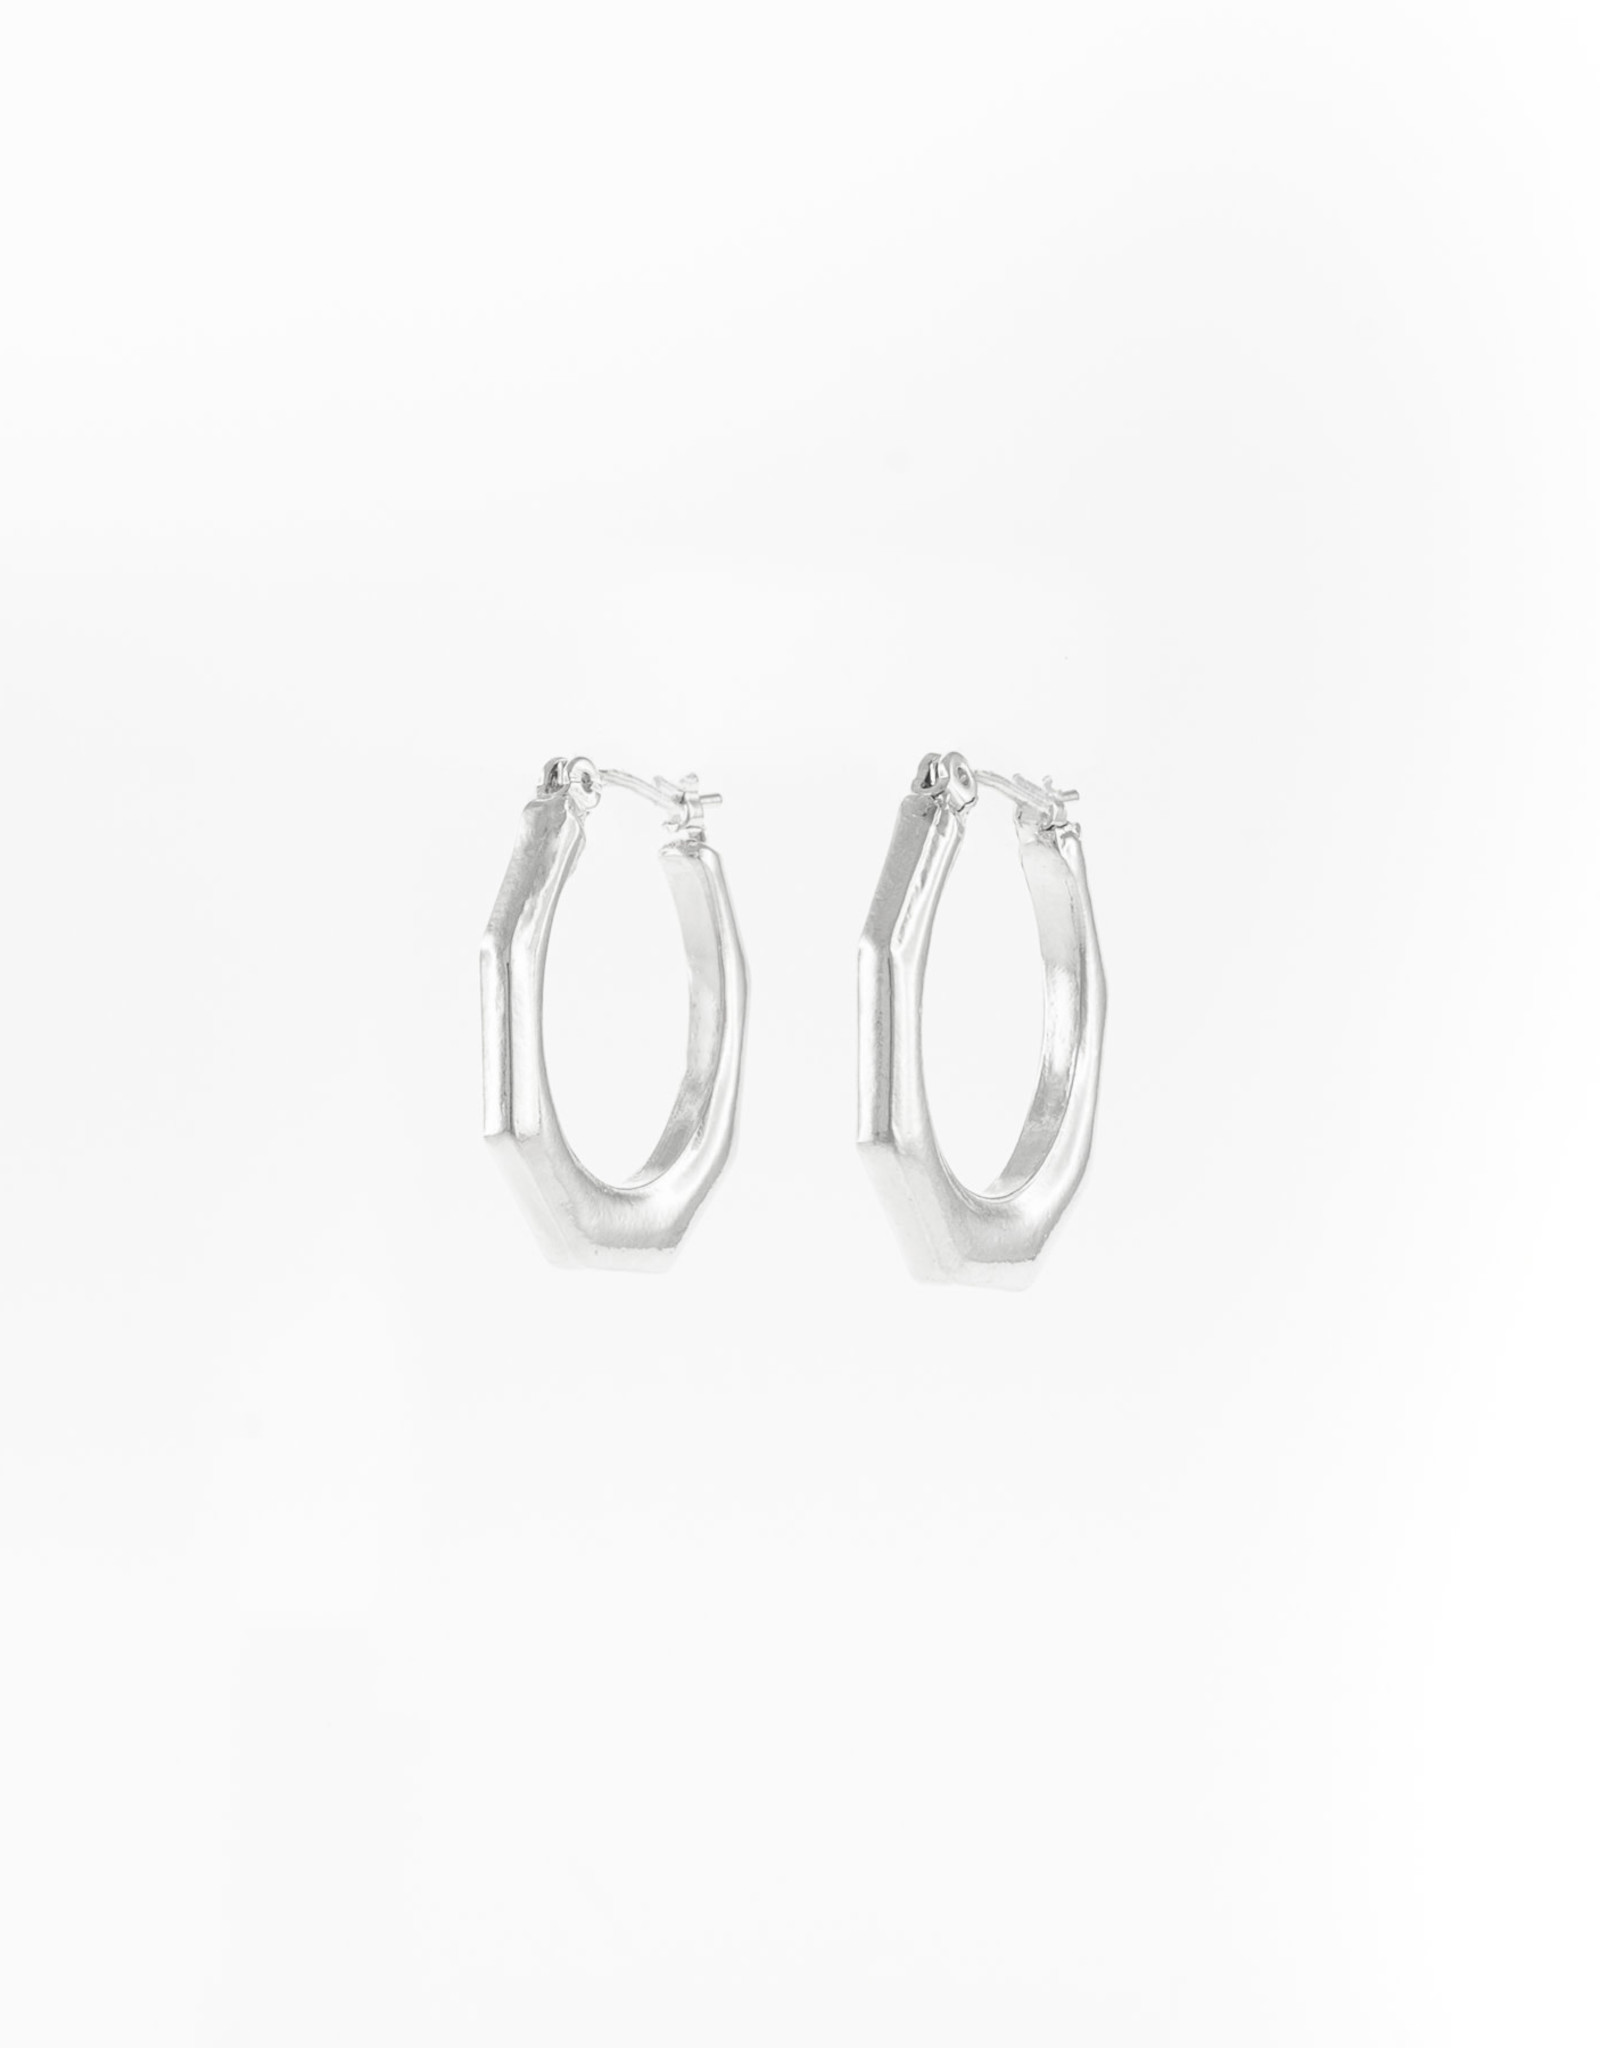 Jackie J 0.9" Oval hoops earrings with sharp edges Silver